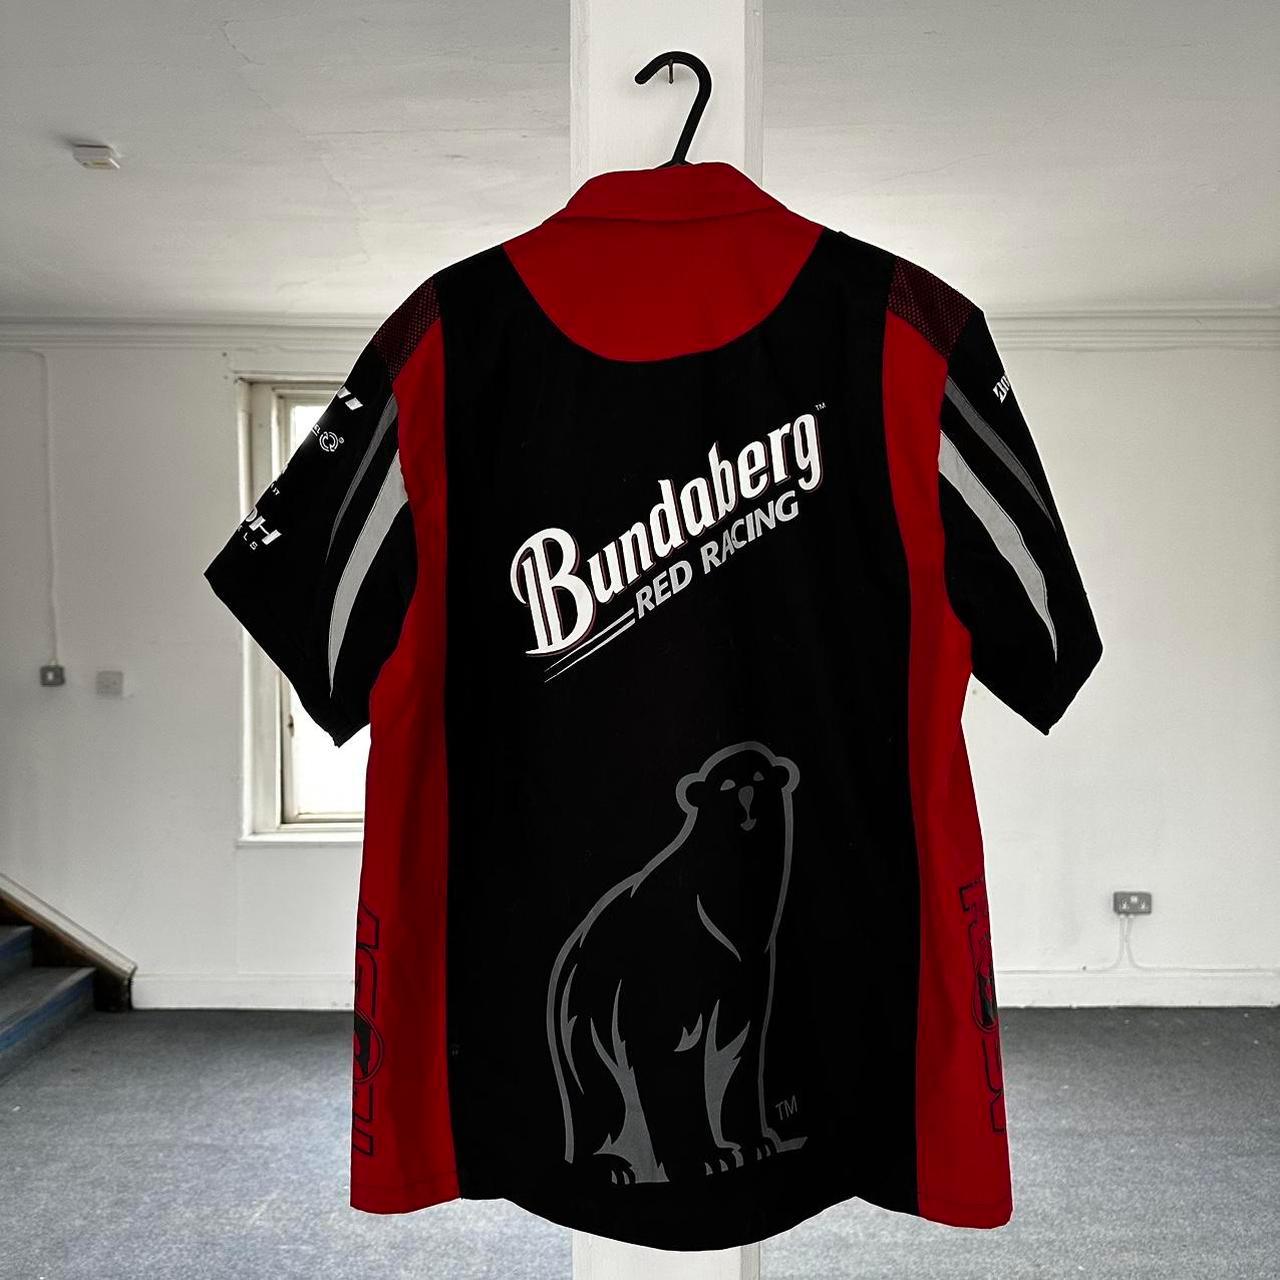 Red and Black Bundaberg Racing shirt - Known Source